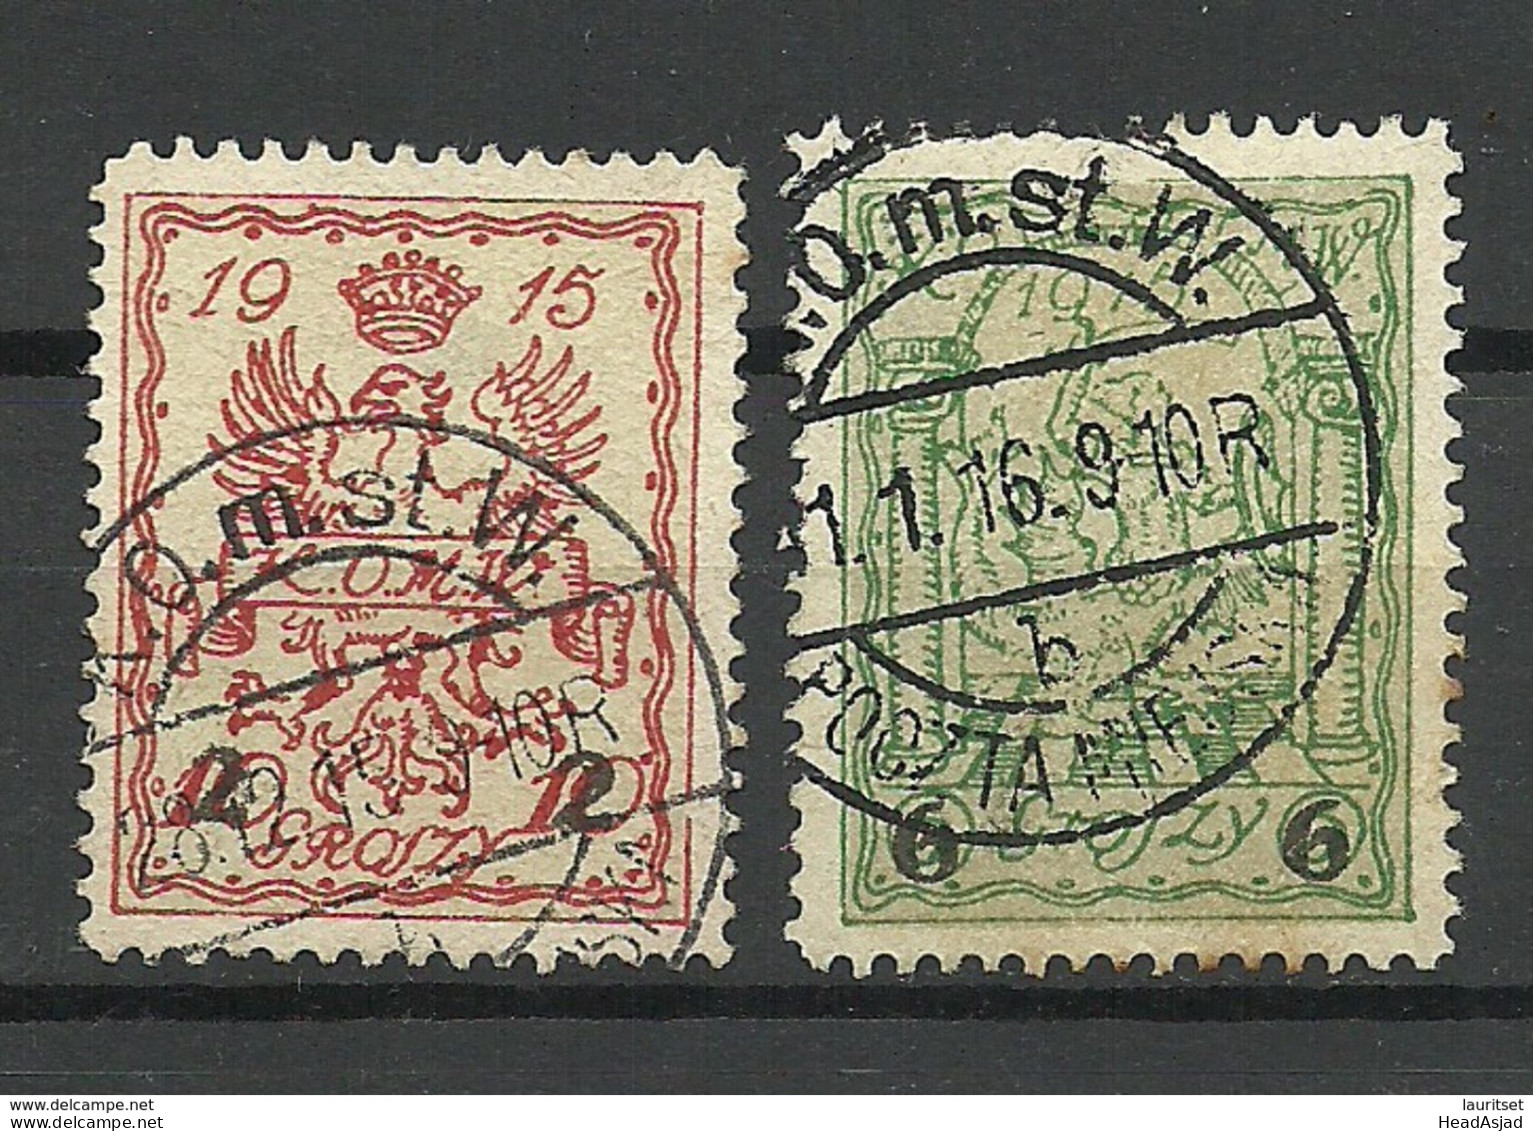 POLEN Poland 1915 City Post Warschau Michel 5 - 6 O - Used Stamps